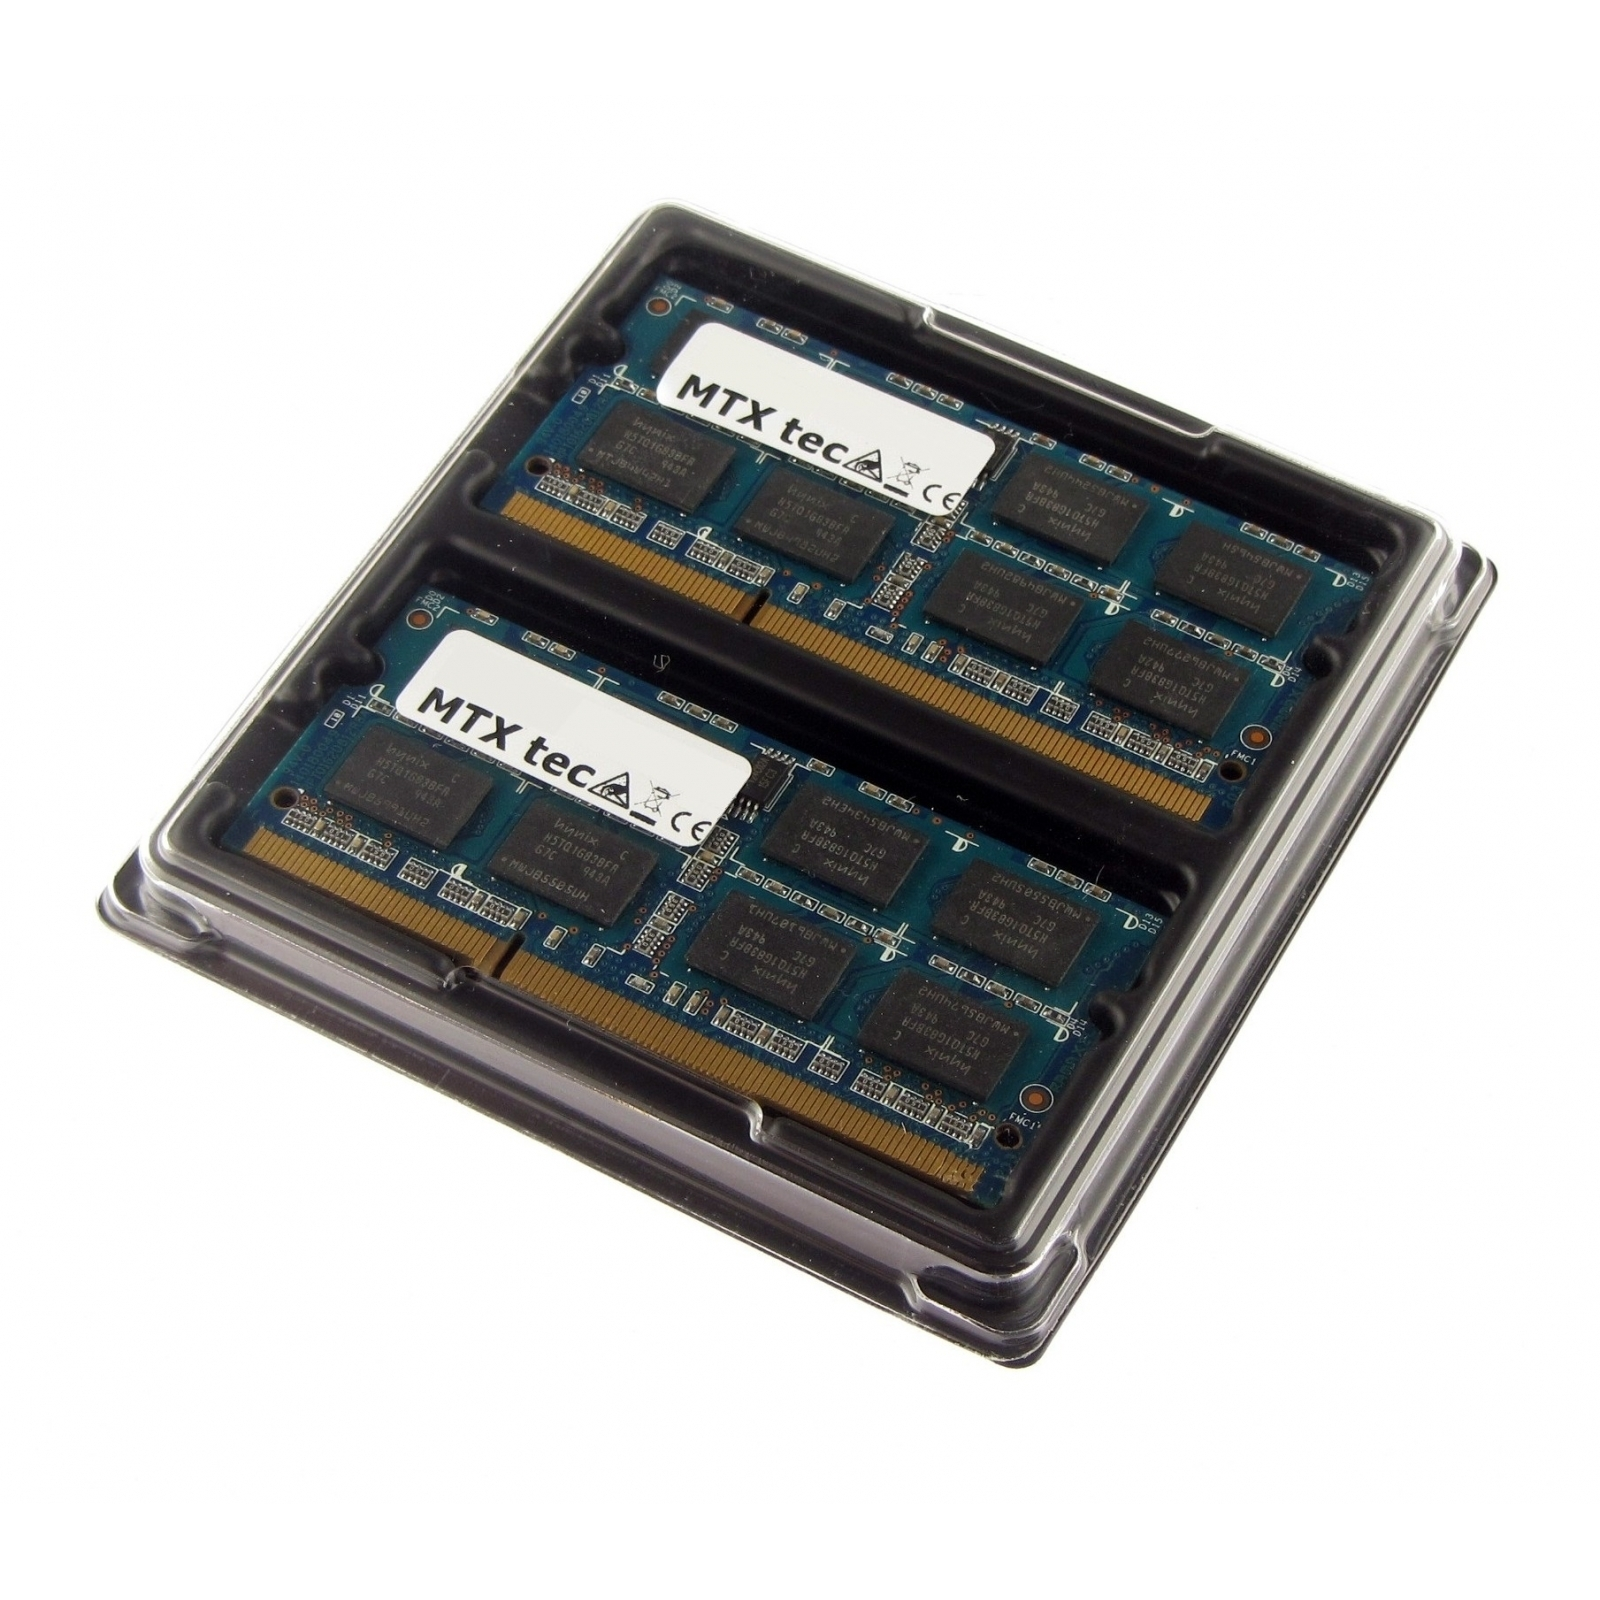 MTXTEC 16GB Kit 2x 8GB 8 Pin, PC3-12800, Laptop-Speicher SODIMM DDR3 DDR3L 204 GB 1.35V Notebook-Speicher DDR3 1600MHz RAM